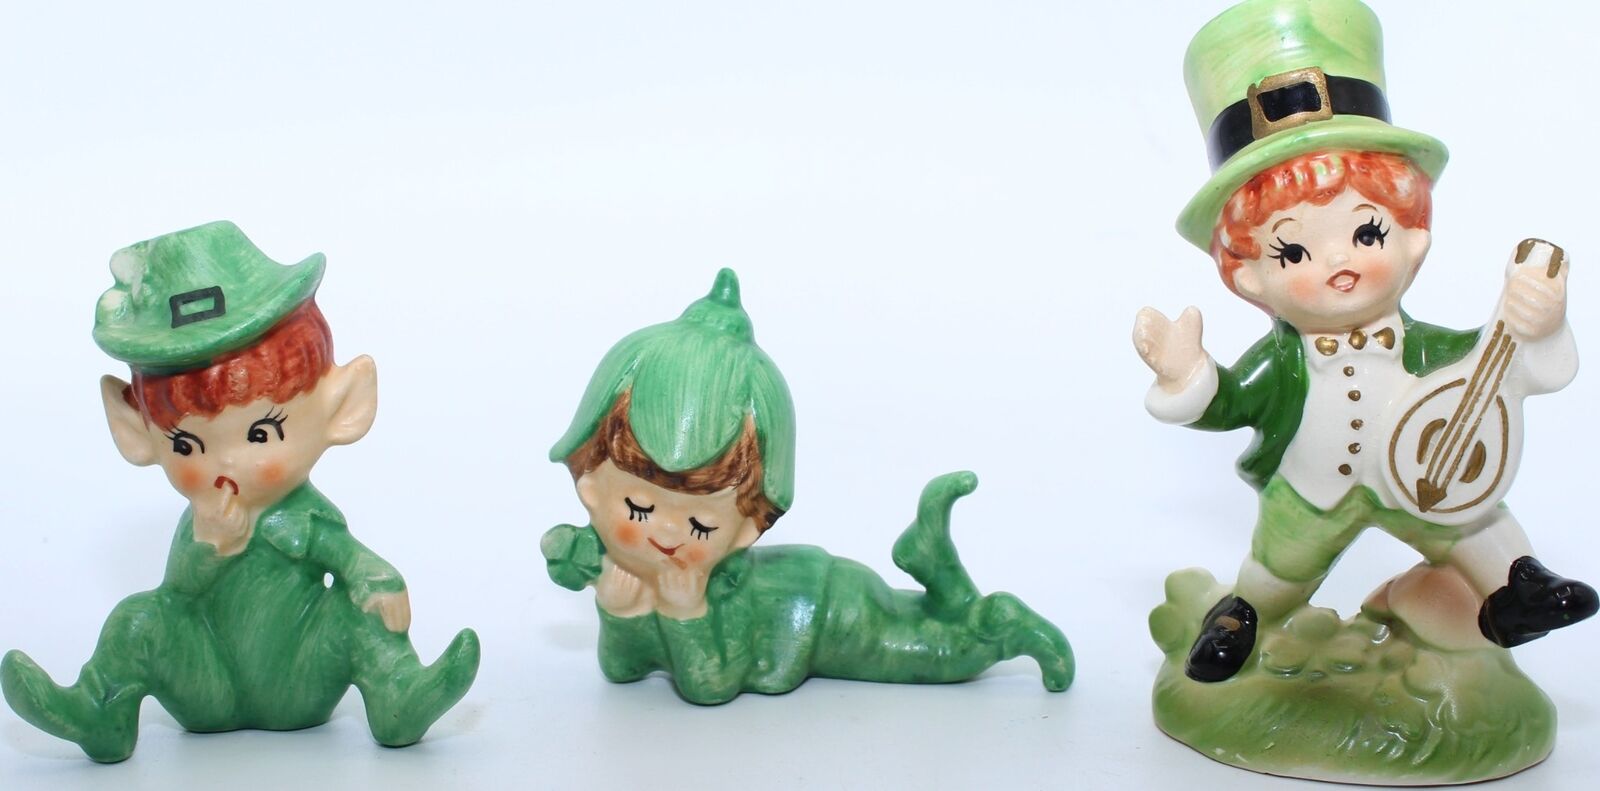 Vintage Lefton 963 St. Patrick's Day Green Leprechaun Ceramic Figurine Lot of 3